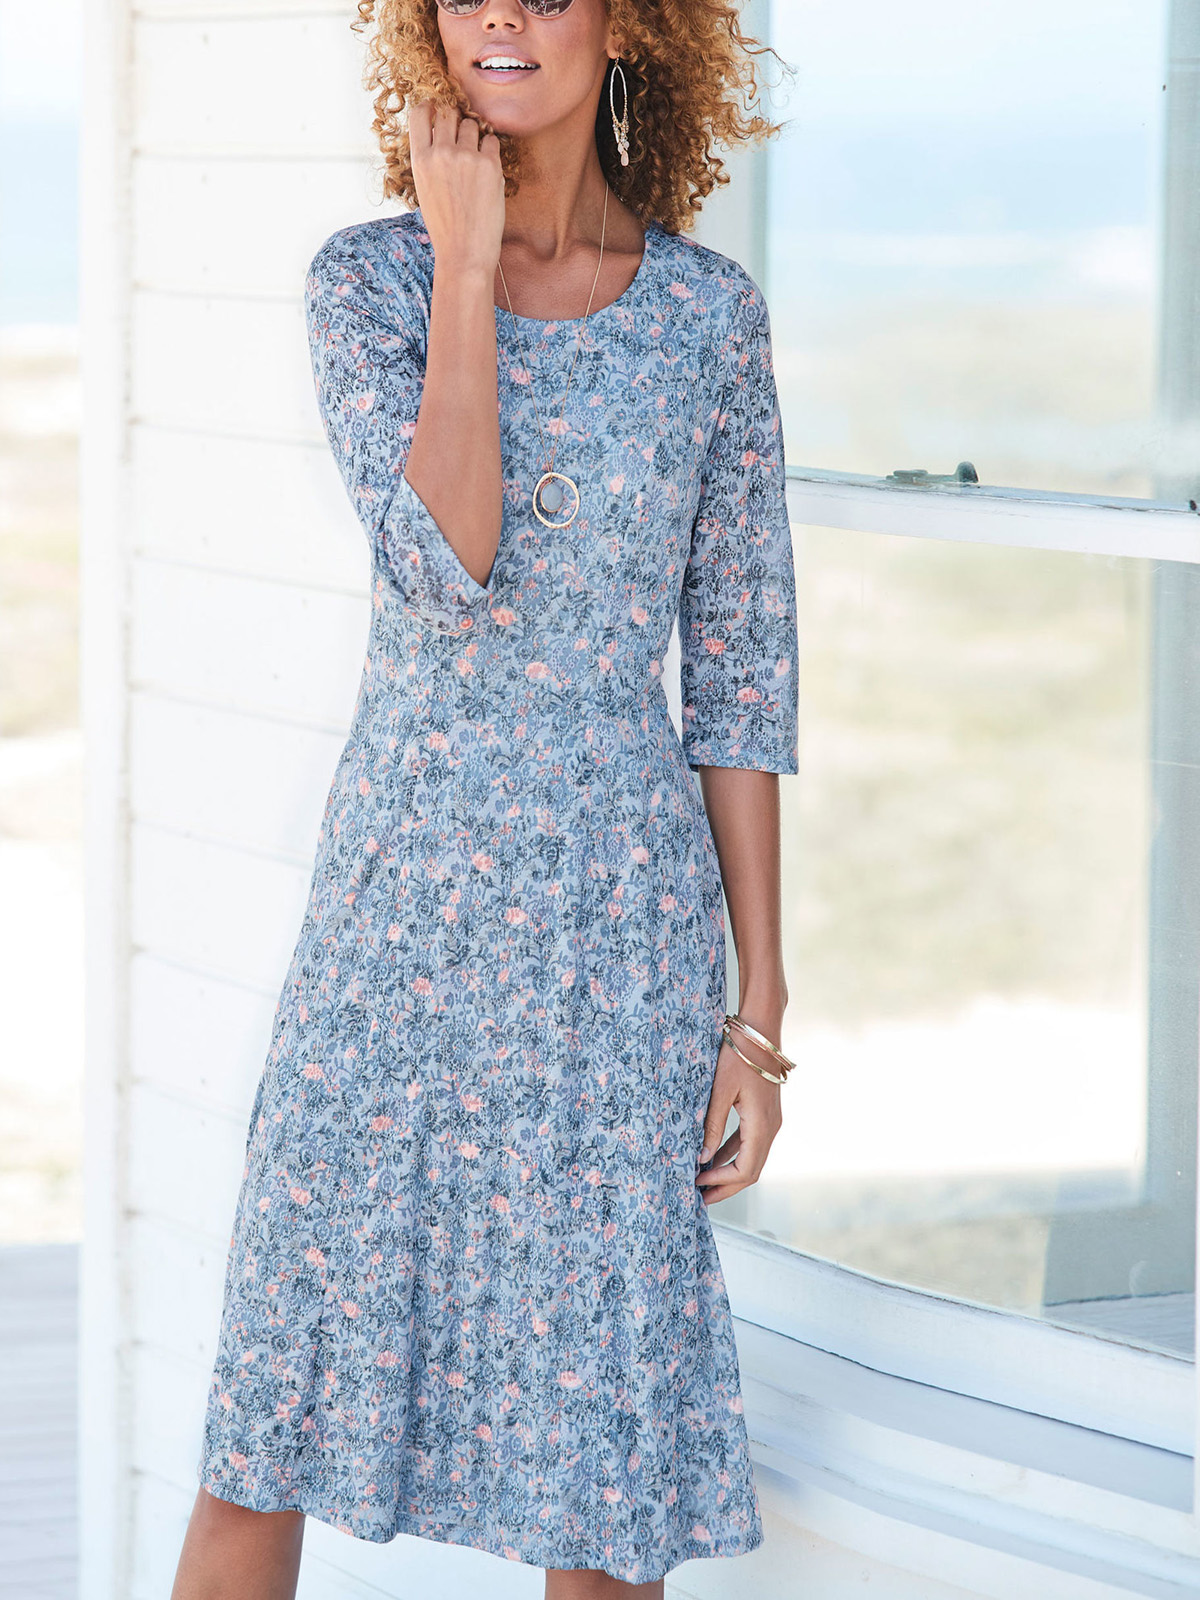 Cotton Traders BLUE Floral Print Burnout Dress - Plus Size 12 to 20